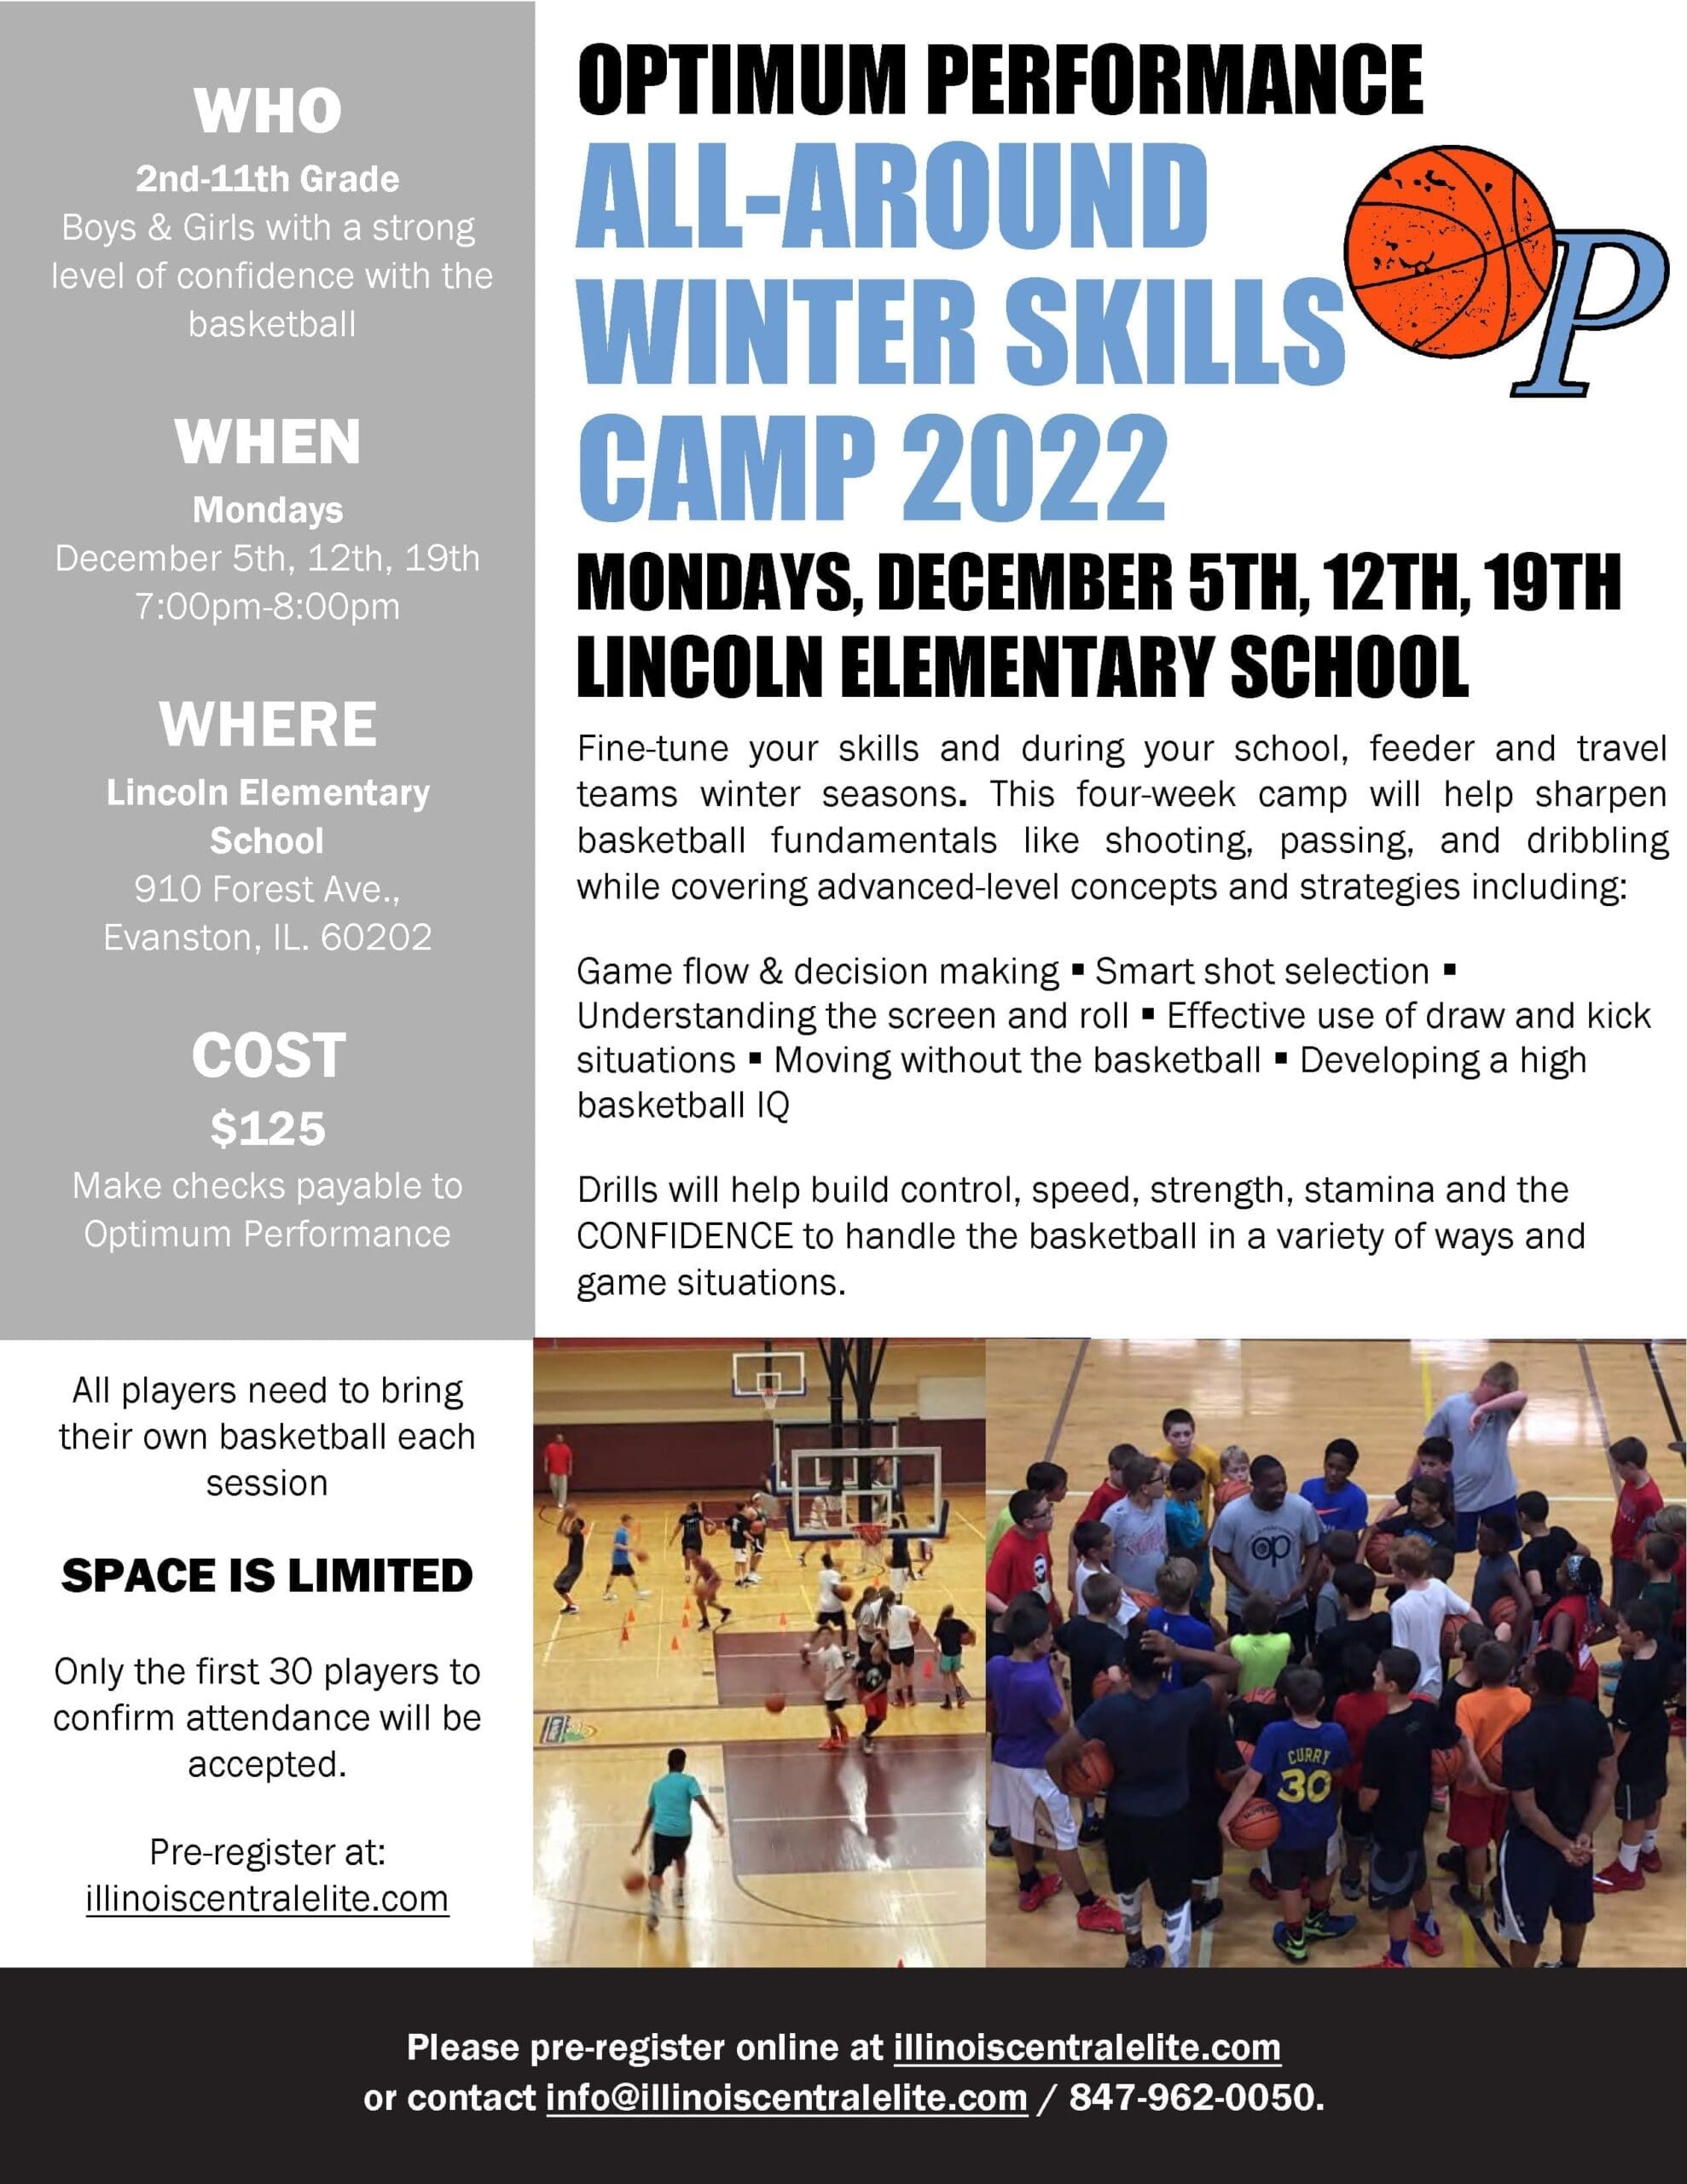 OP All-Around Winter Skills Camp 2022